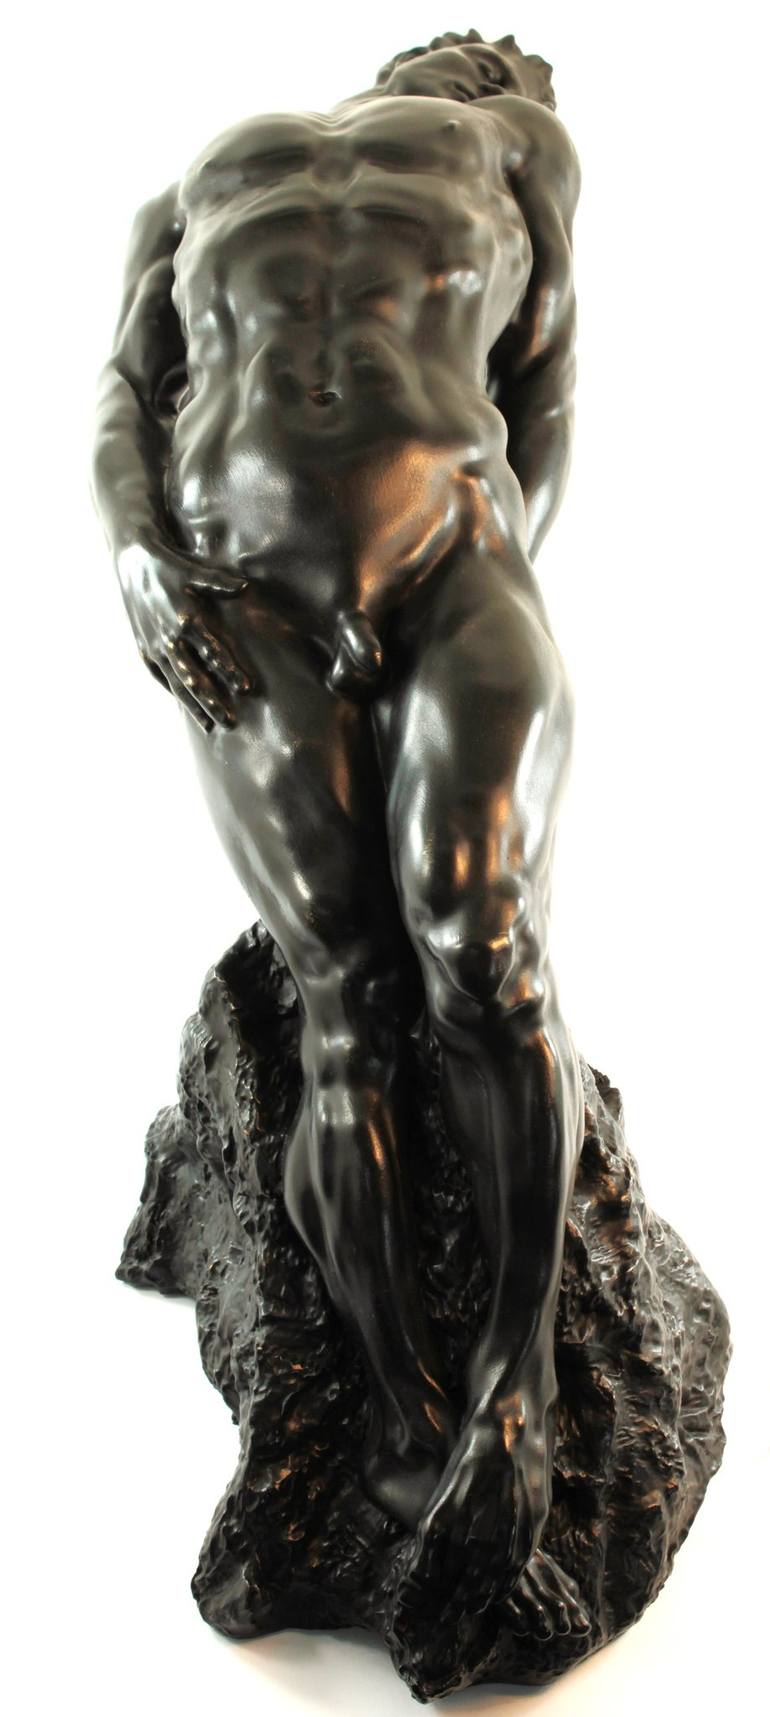 Original 3d Sculpture Nude Sculpture by Michael Craig